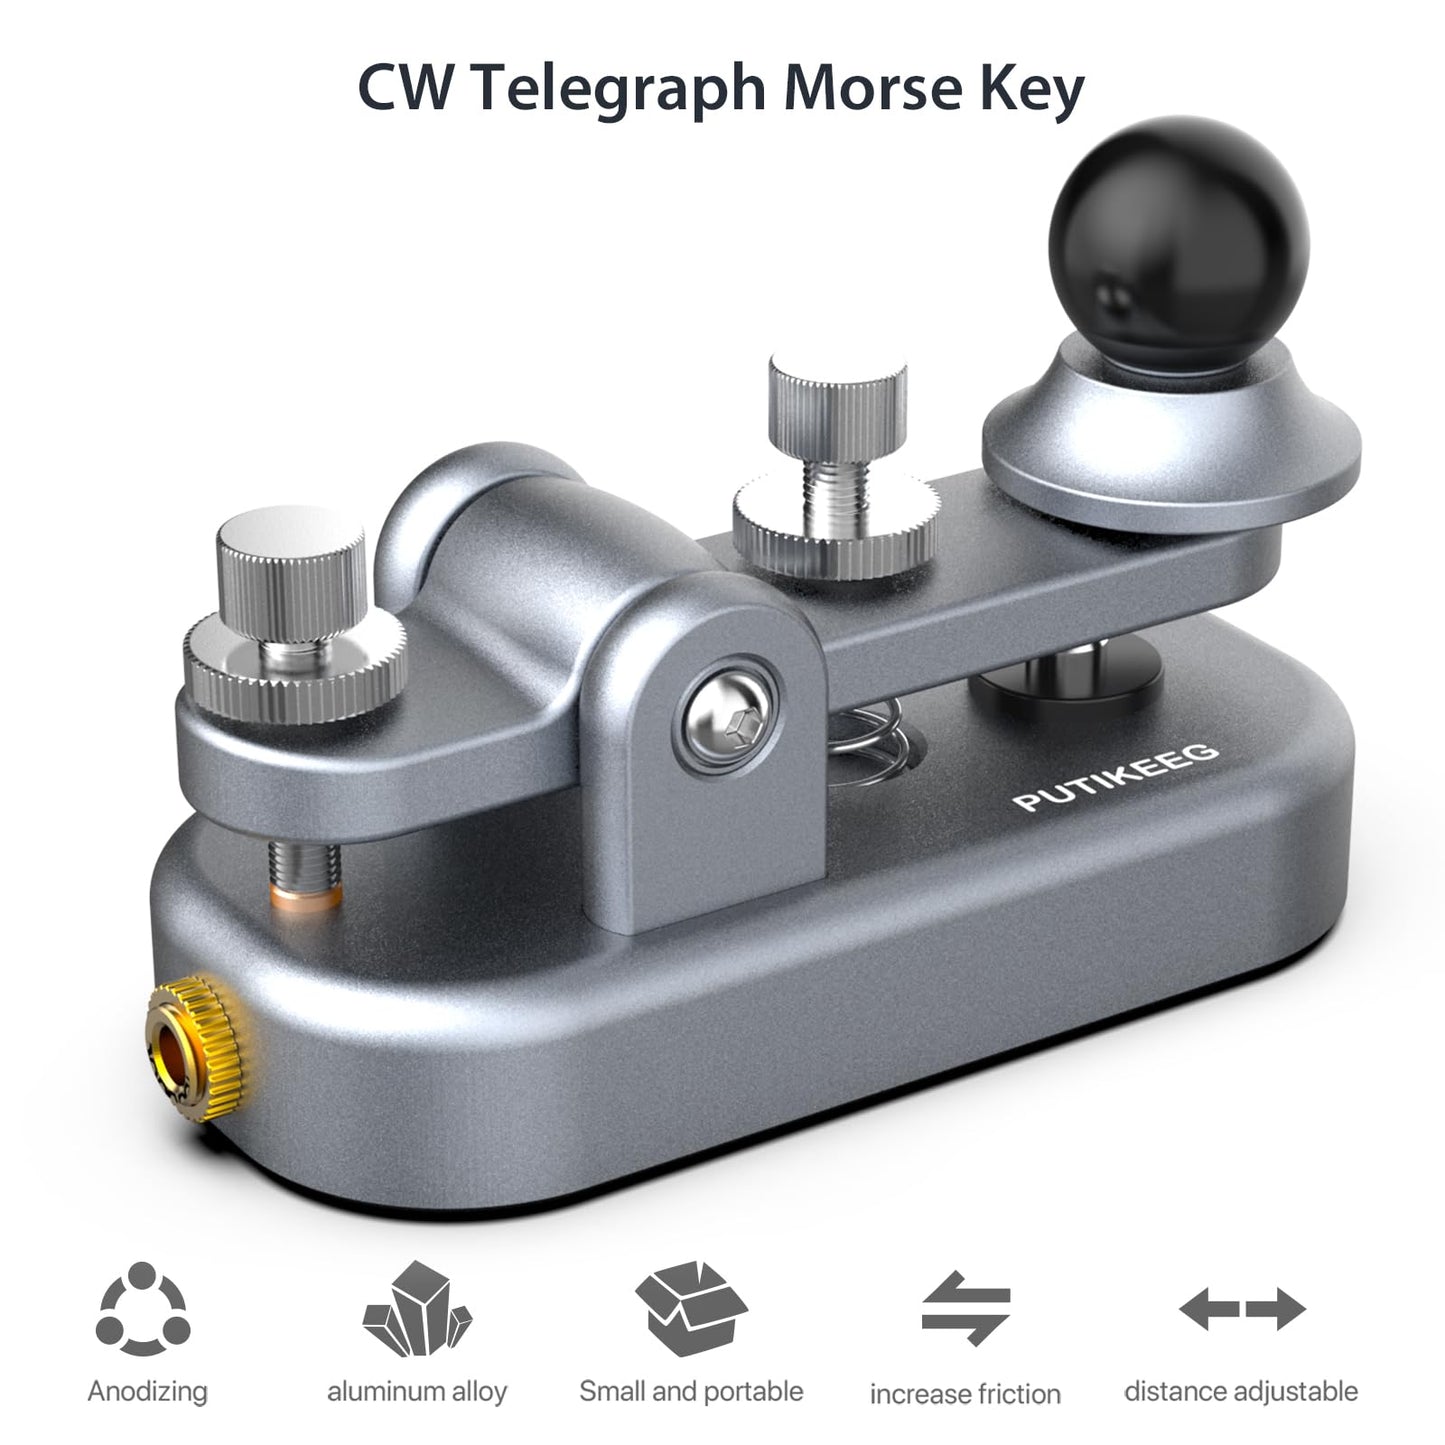 Mini CW  Morse Key